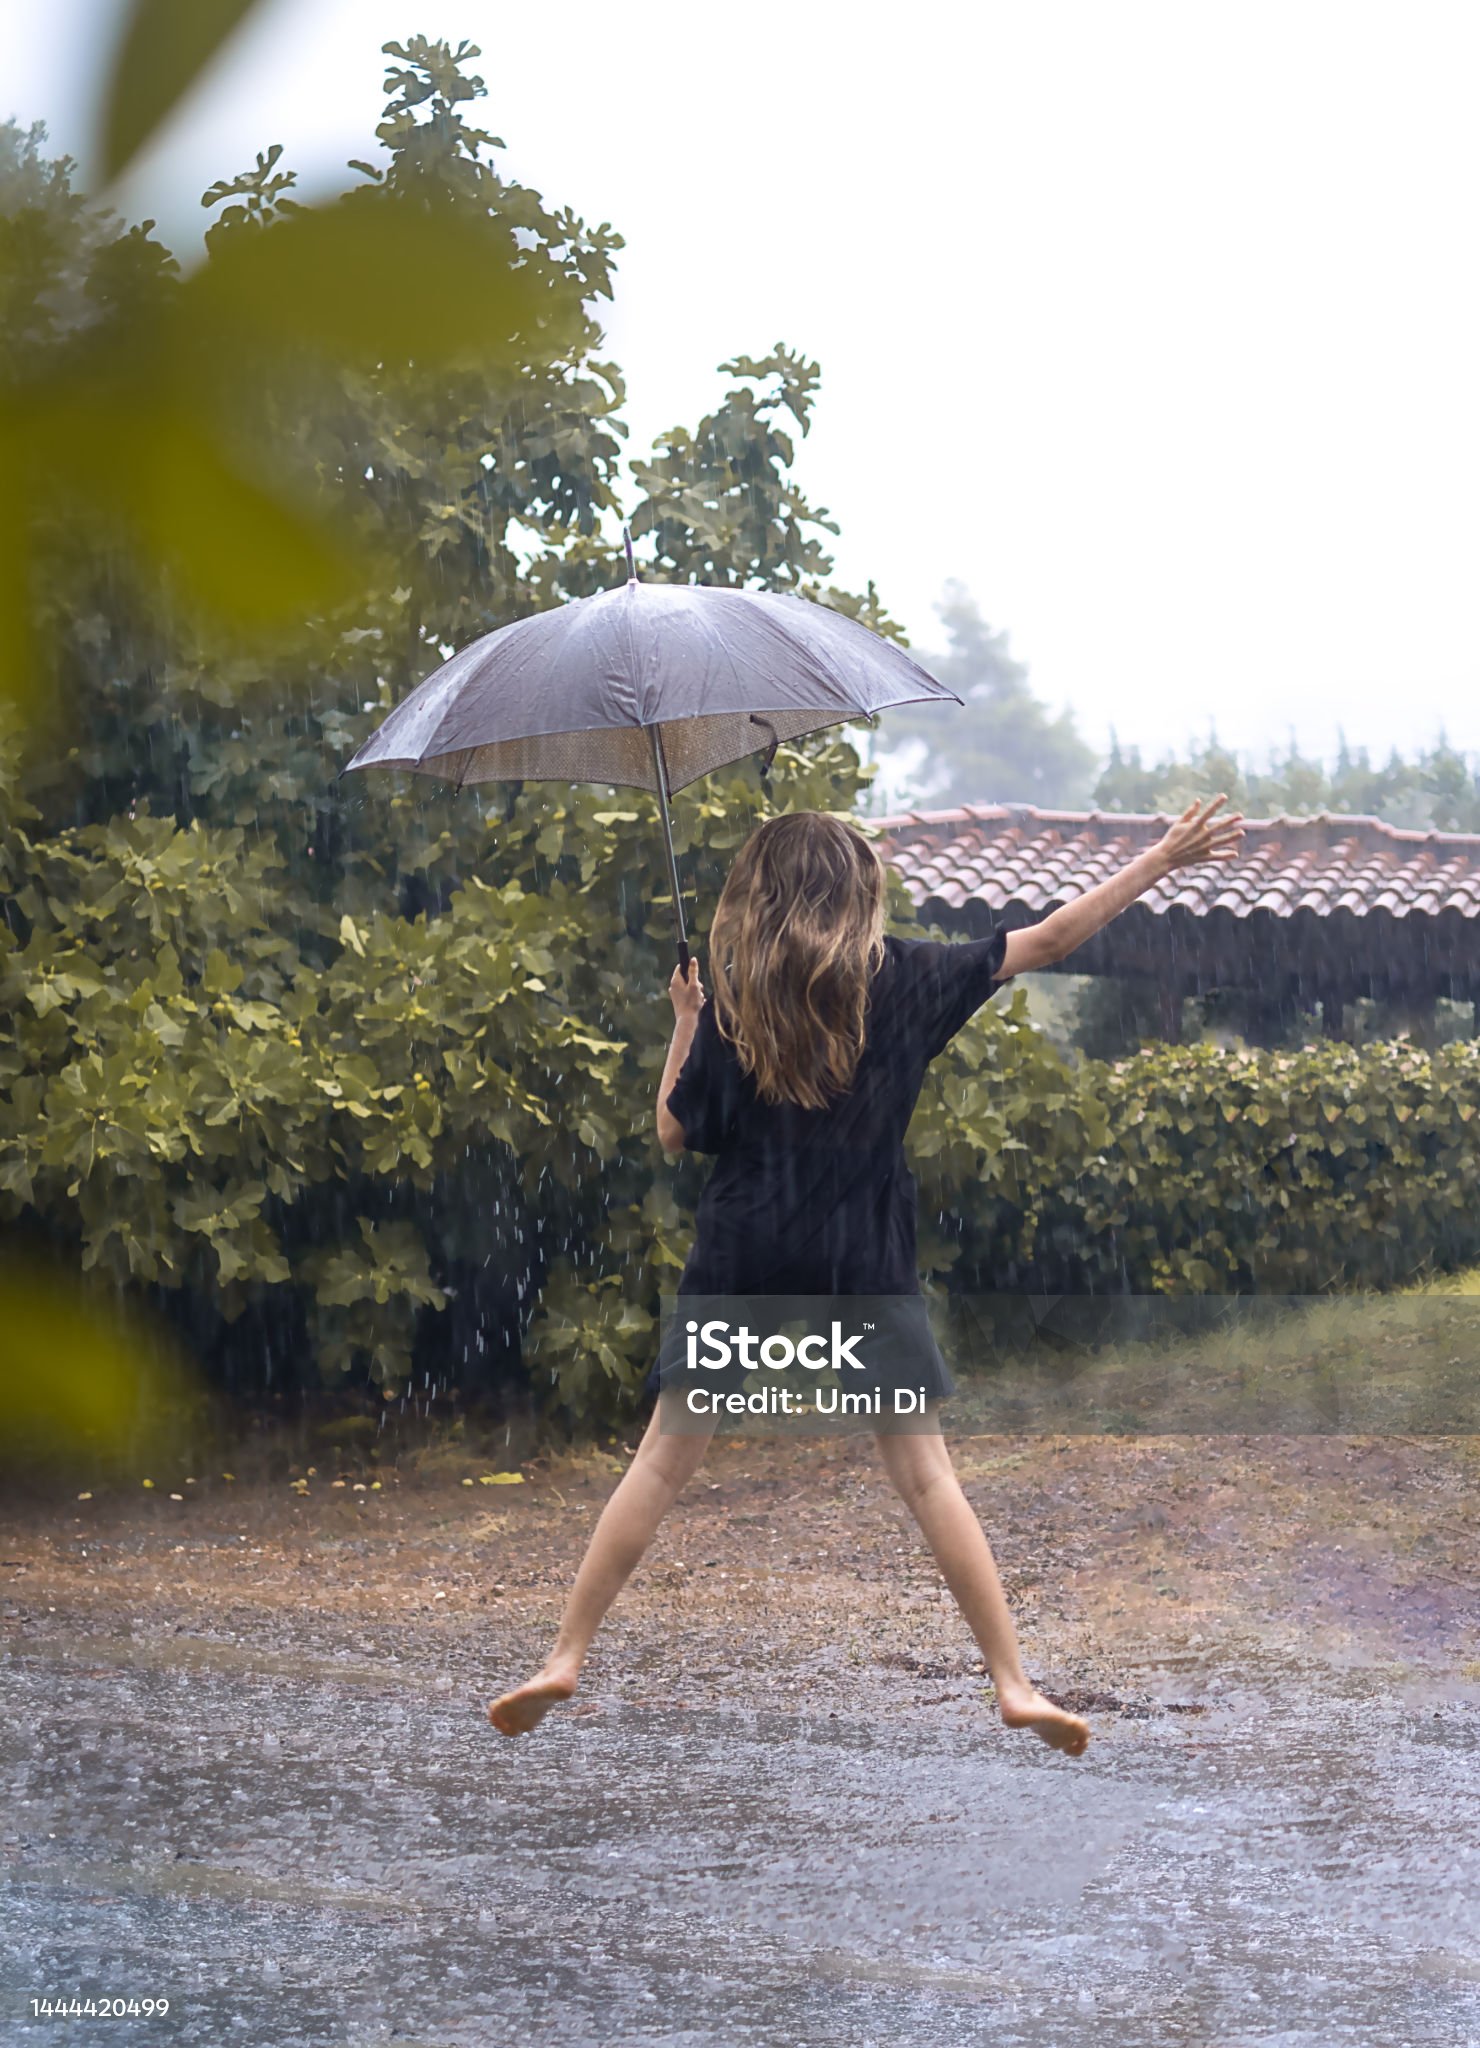 https://media.istockphoto.com/id/1444420499/tr/foto%C4%9Fraf/happy-and-barefoot-in-the-summer-rain.jpg?s=2048x2048&amp;w=is&amp;k=20&amp;c=755KL260agHB3gSYGXr1IiZaR1T2xVMiU-esaMMM9Zc=